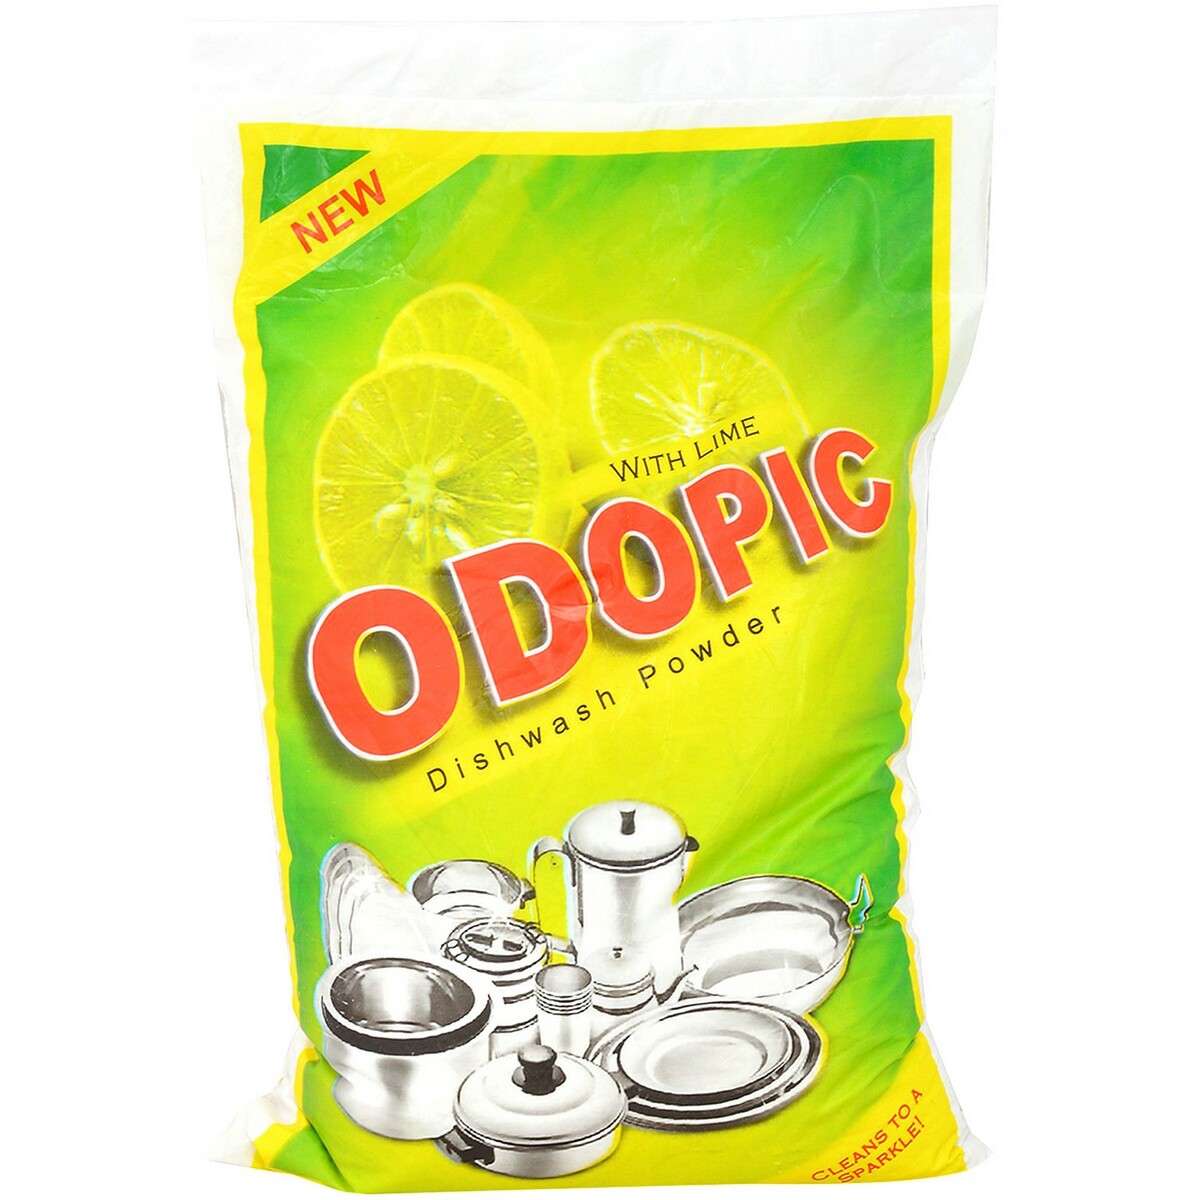 Odopic Dish Washing Powder 900gm